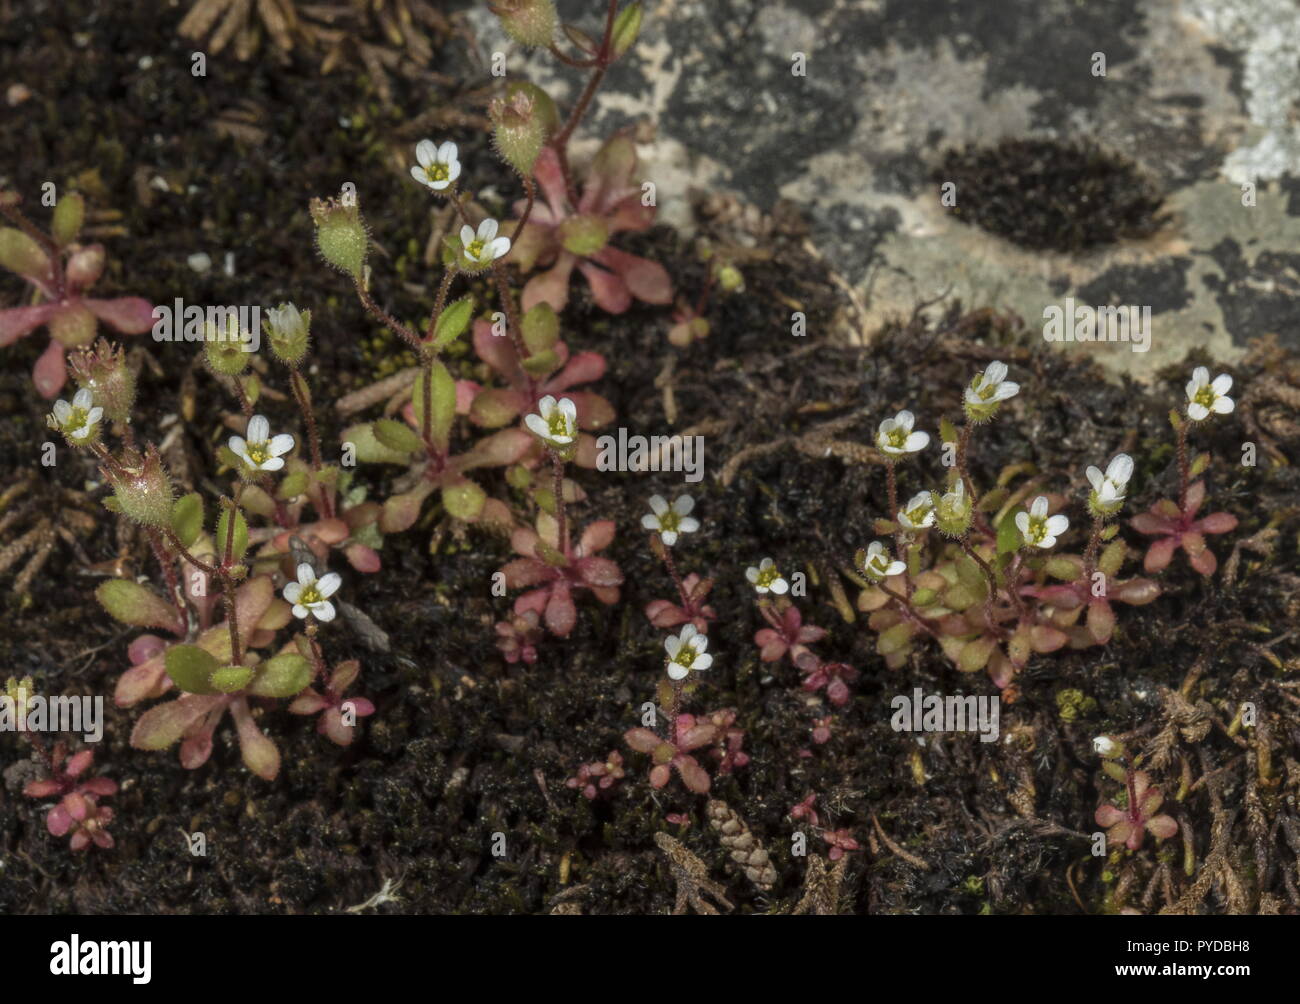 Rue-leaved saxifrage, Saxifraga tridactylites, in flower on limestone pavement. Stock Photo